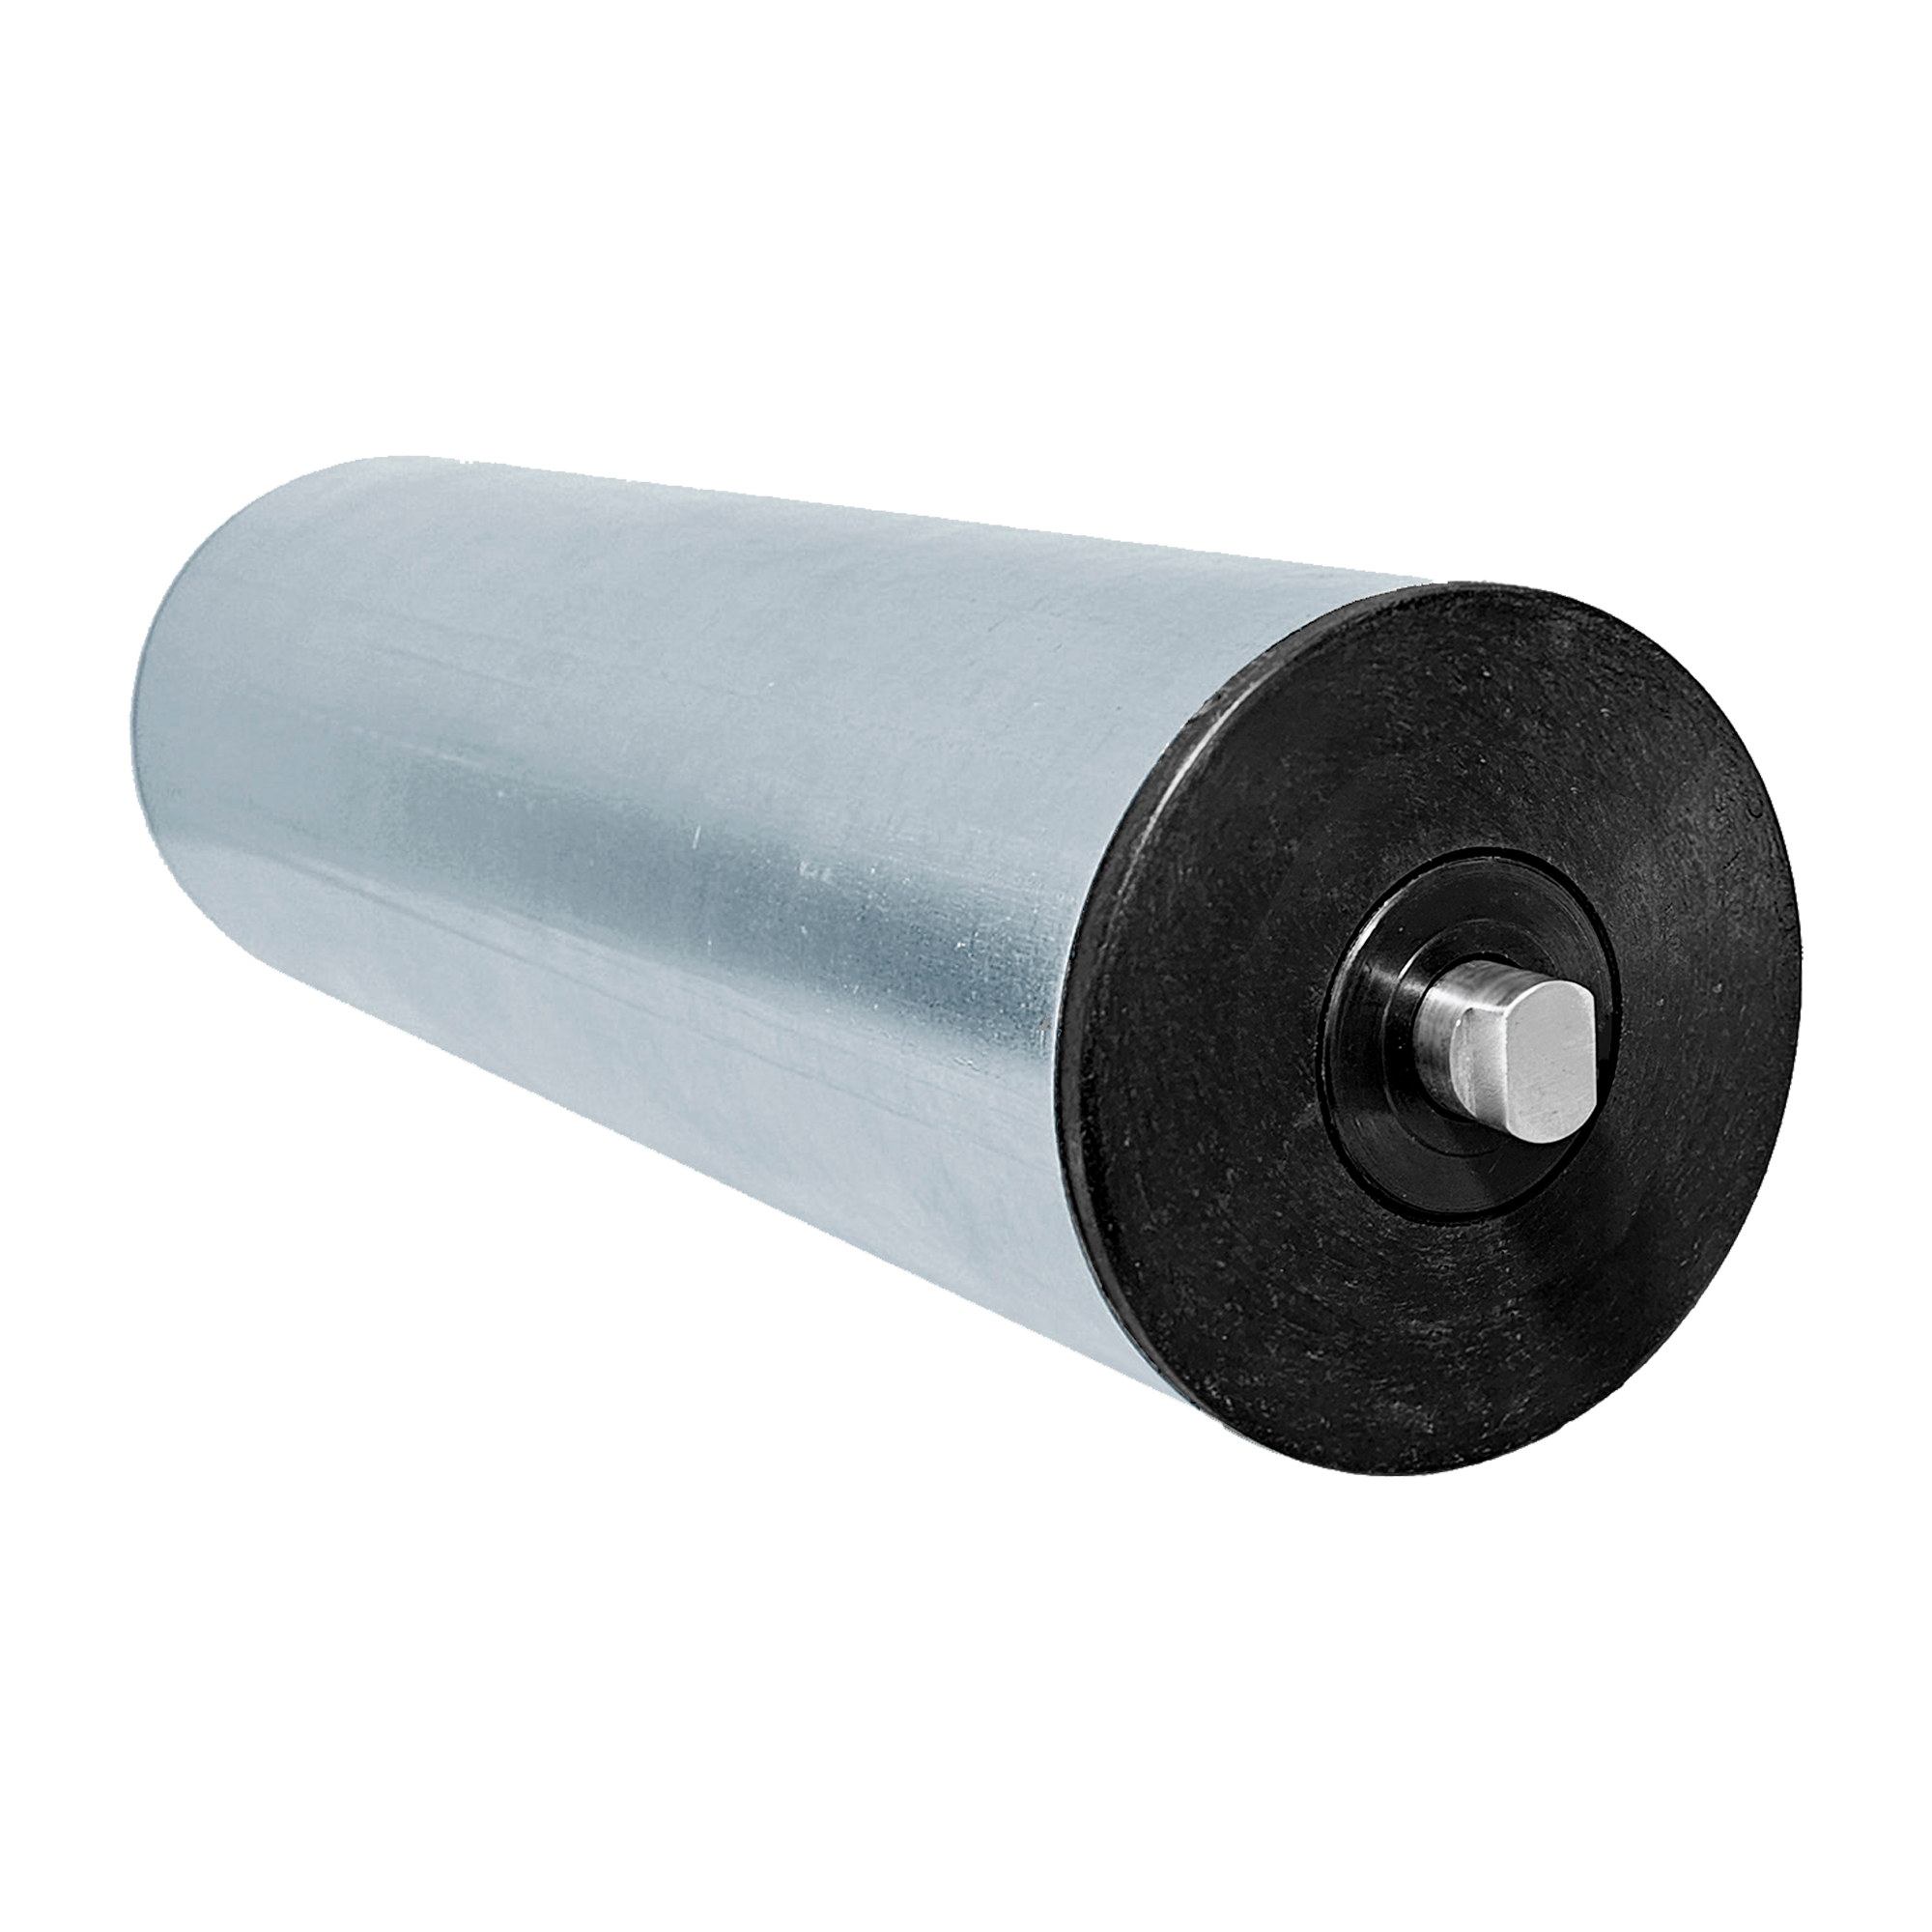 Rolete de Carga - Diâmetro tubo 101,6 mm - Comprimento tubo 315 mm